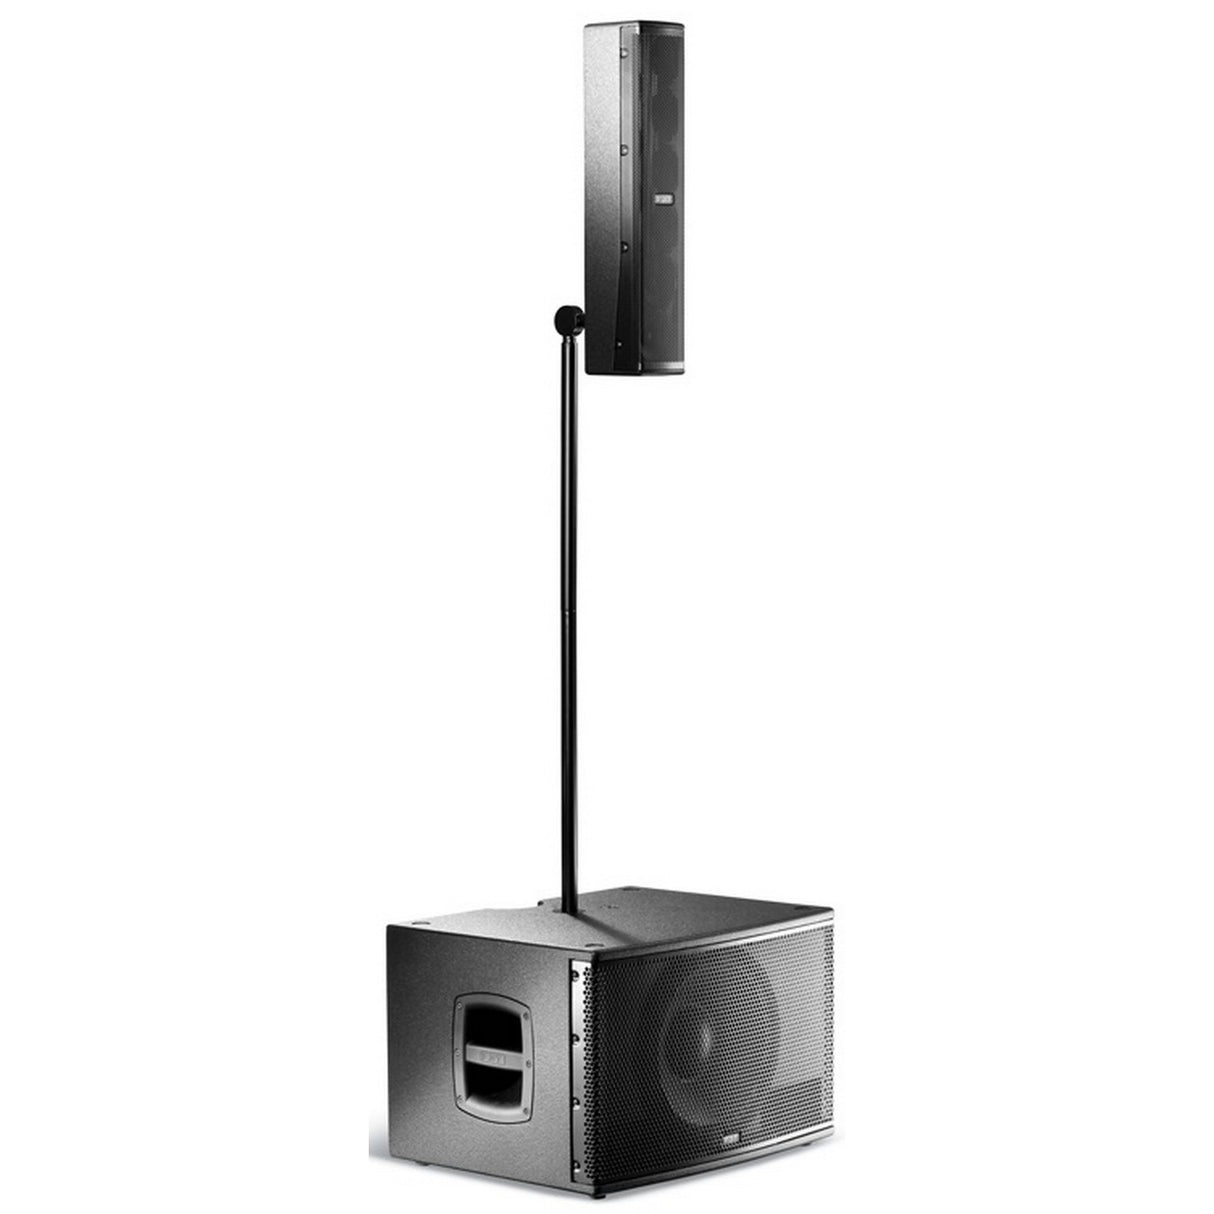 FBT CS-1000 | 2 Way 1000W Line Array Speaker System Black